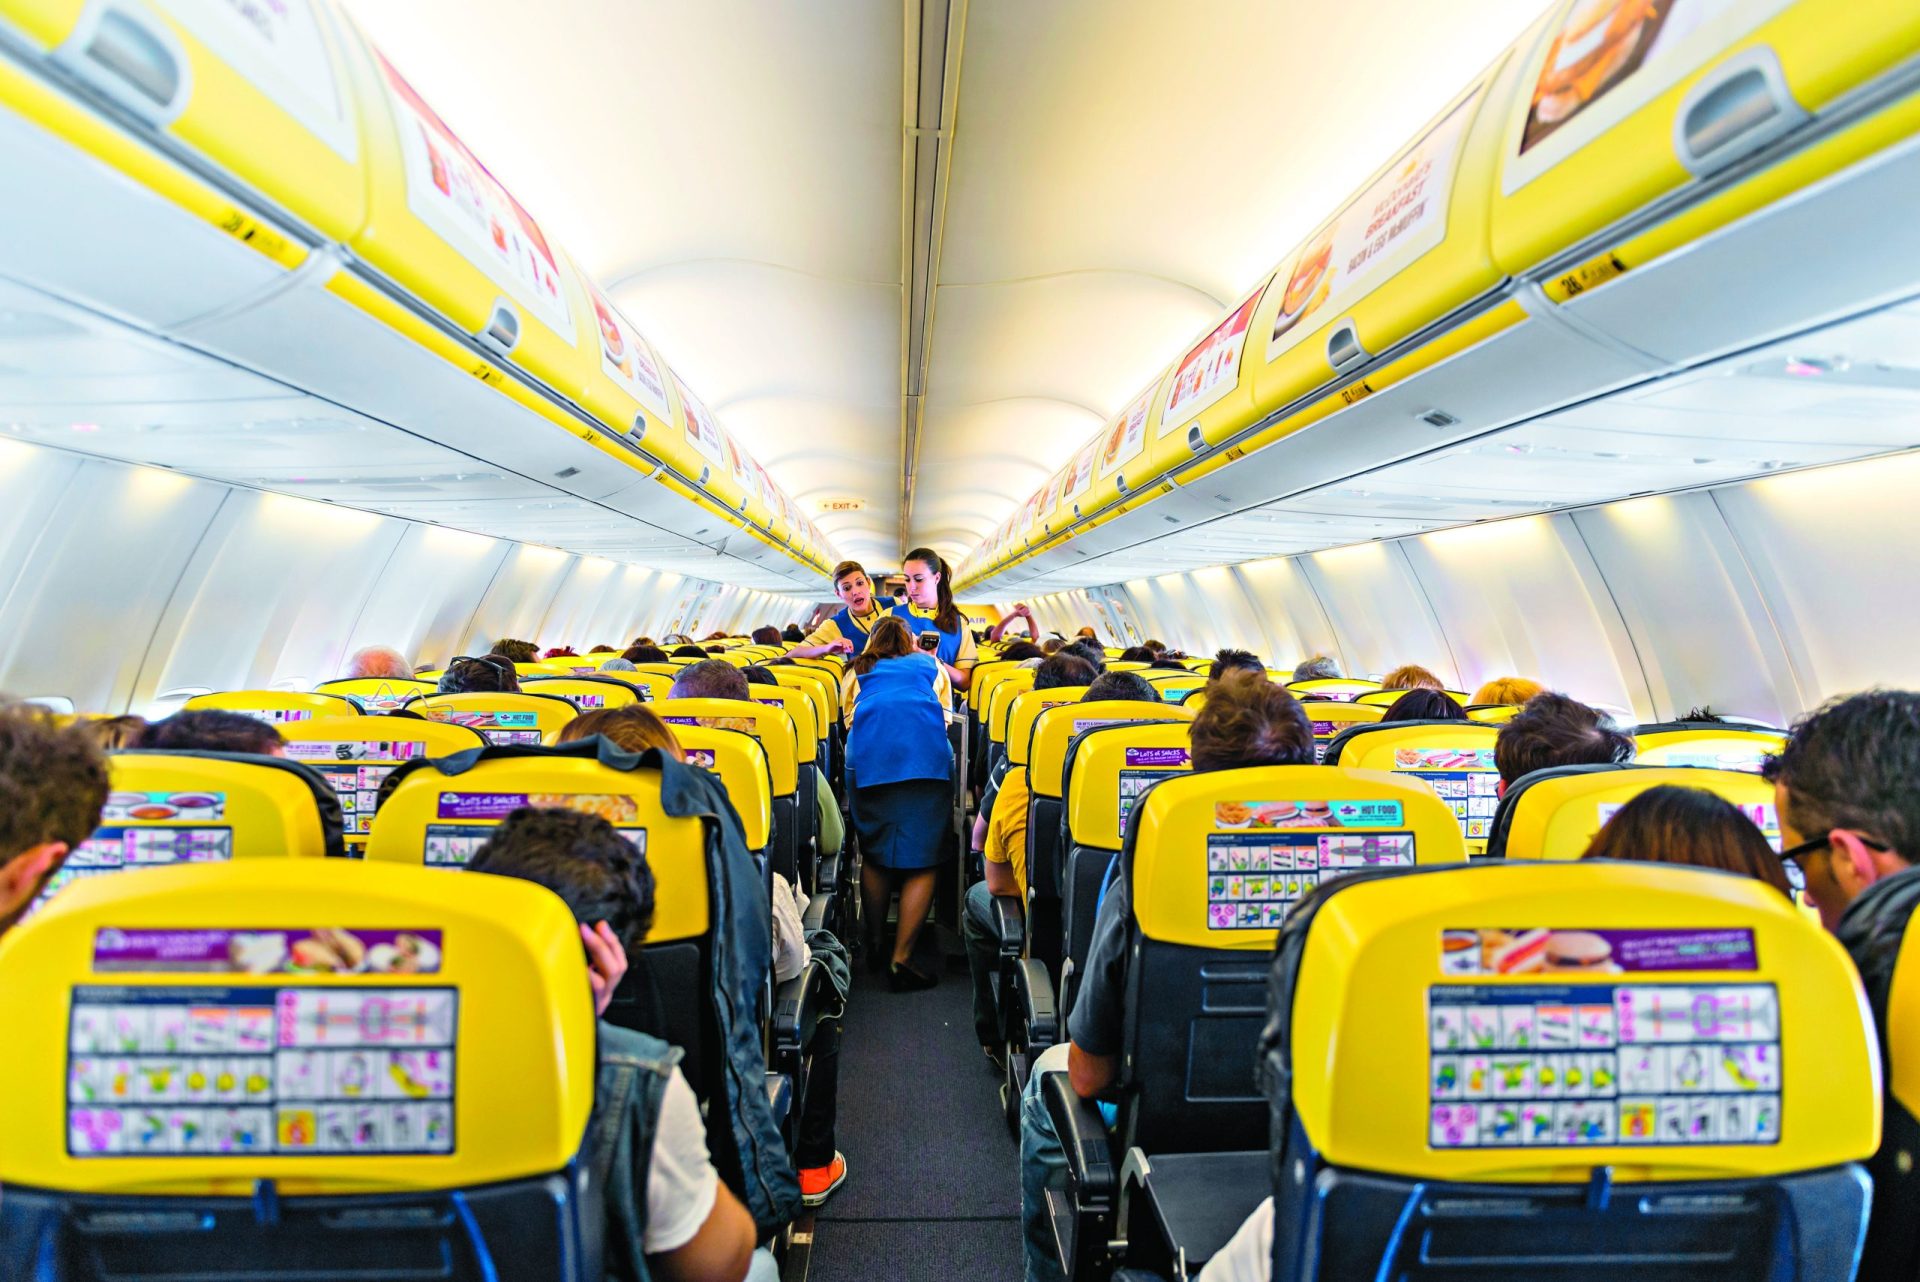 Ryanair: preços baixos escondem más condições de trabalho